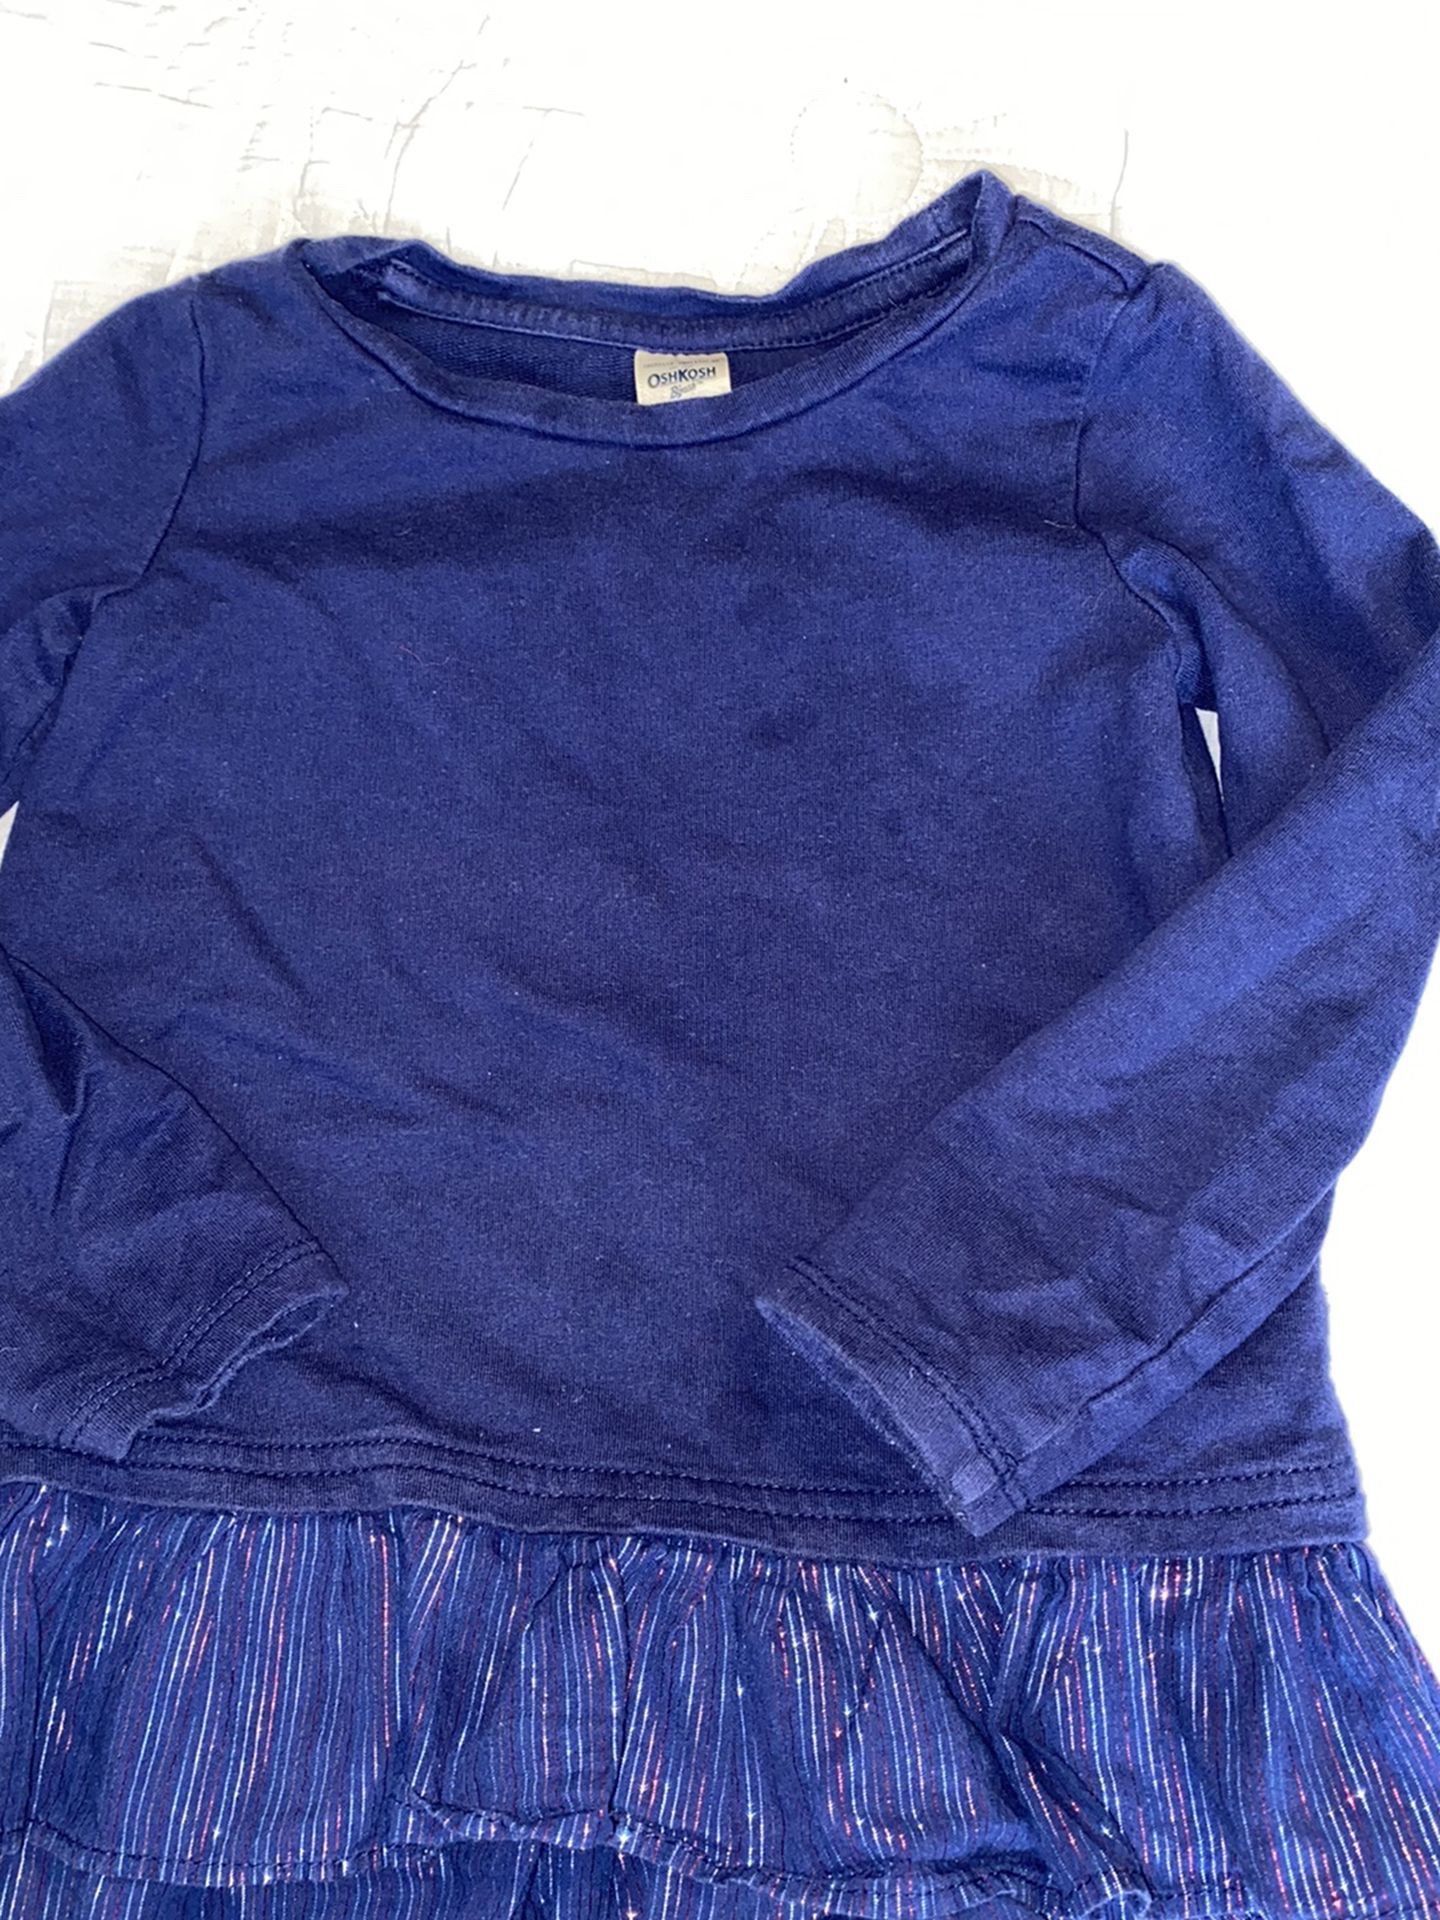 Toddler Girl Shirt Size 3T